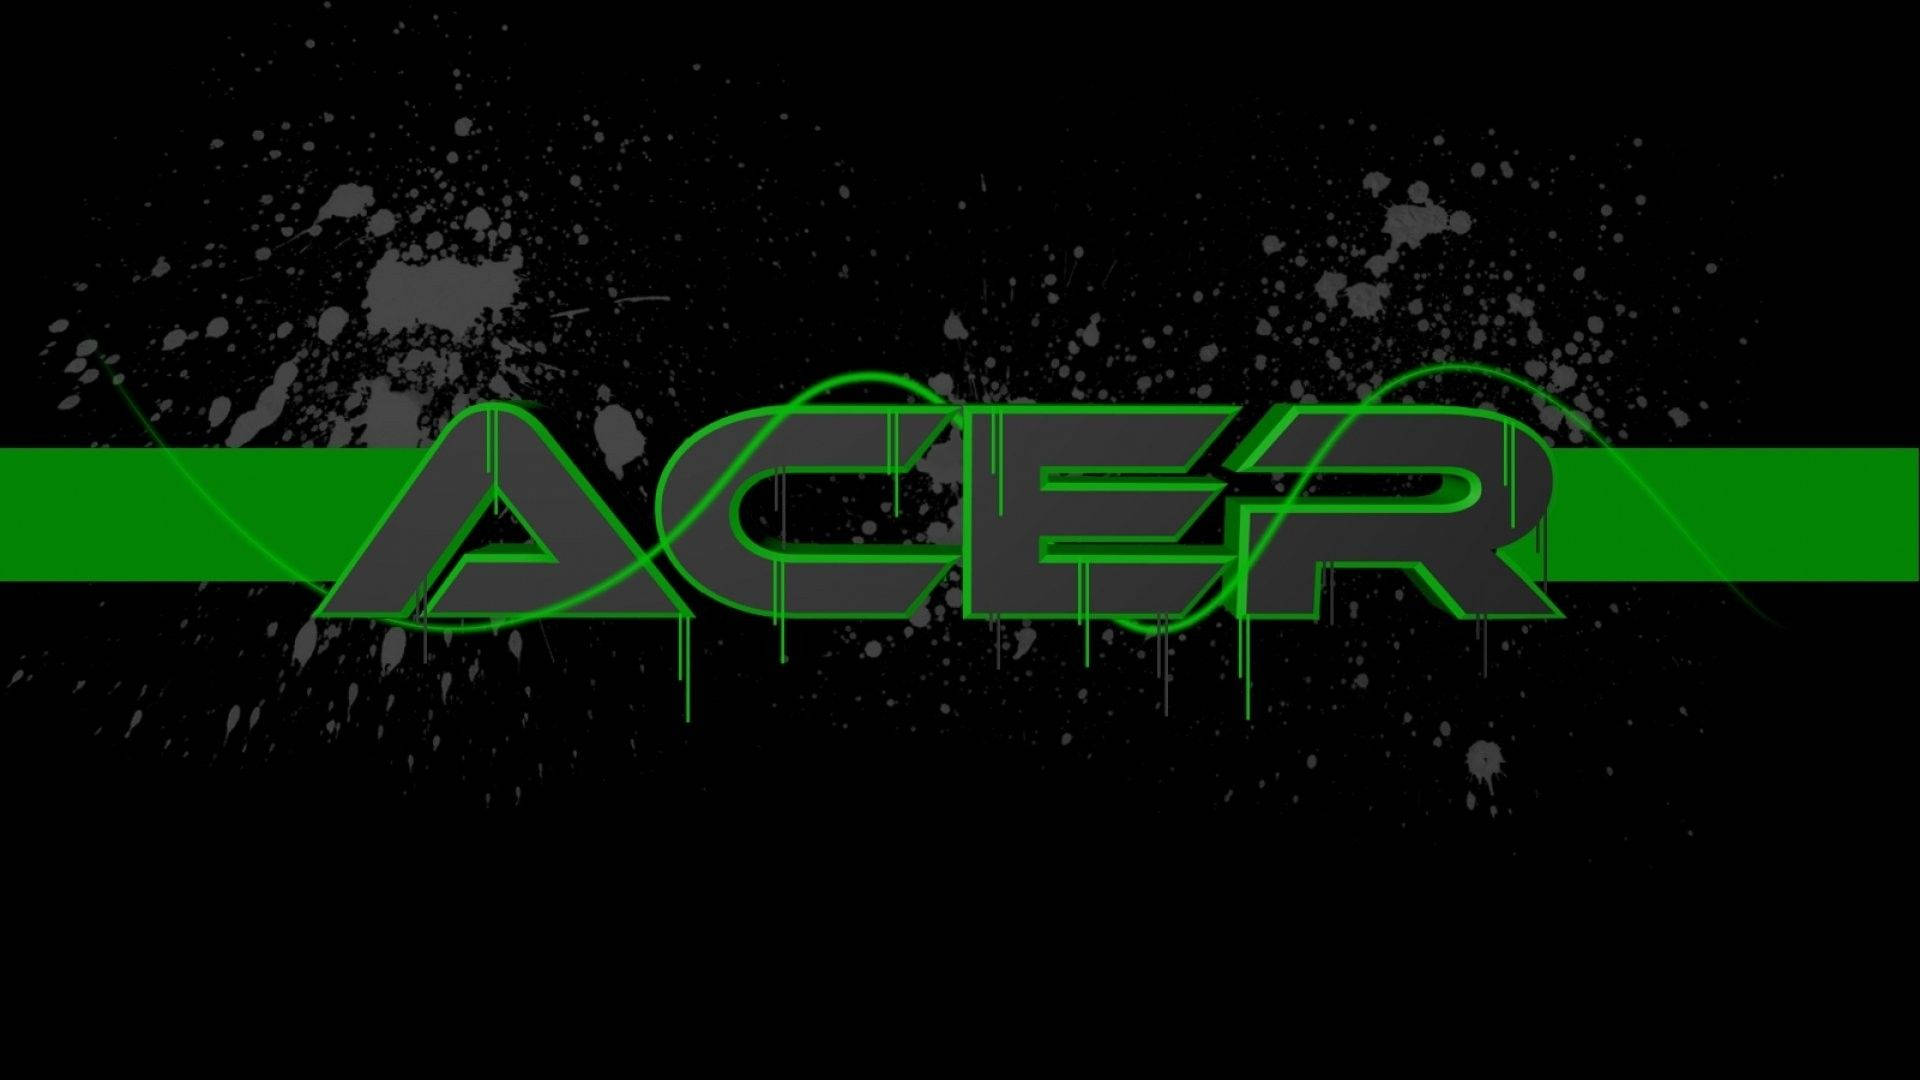 Captivating Acer Logo Paint Splatters Picture